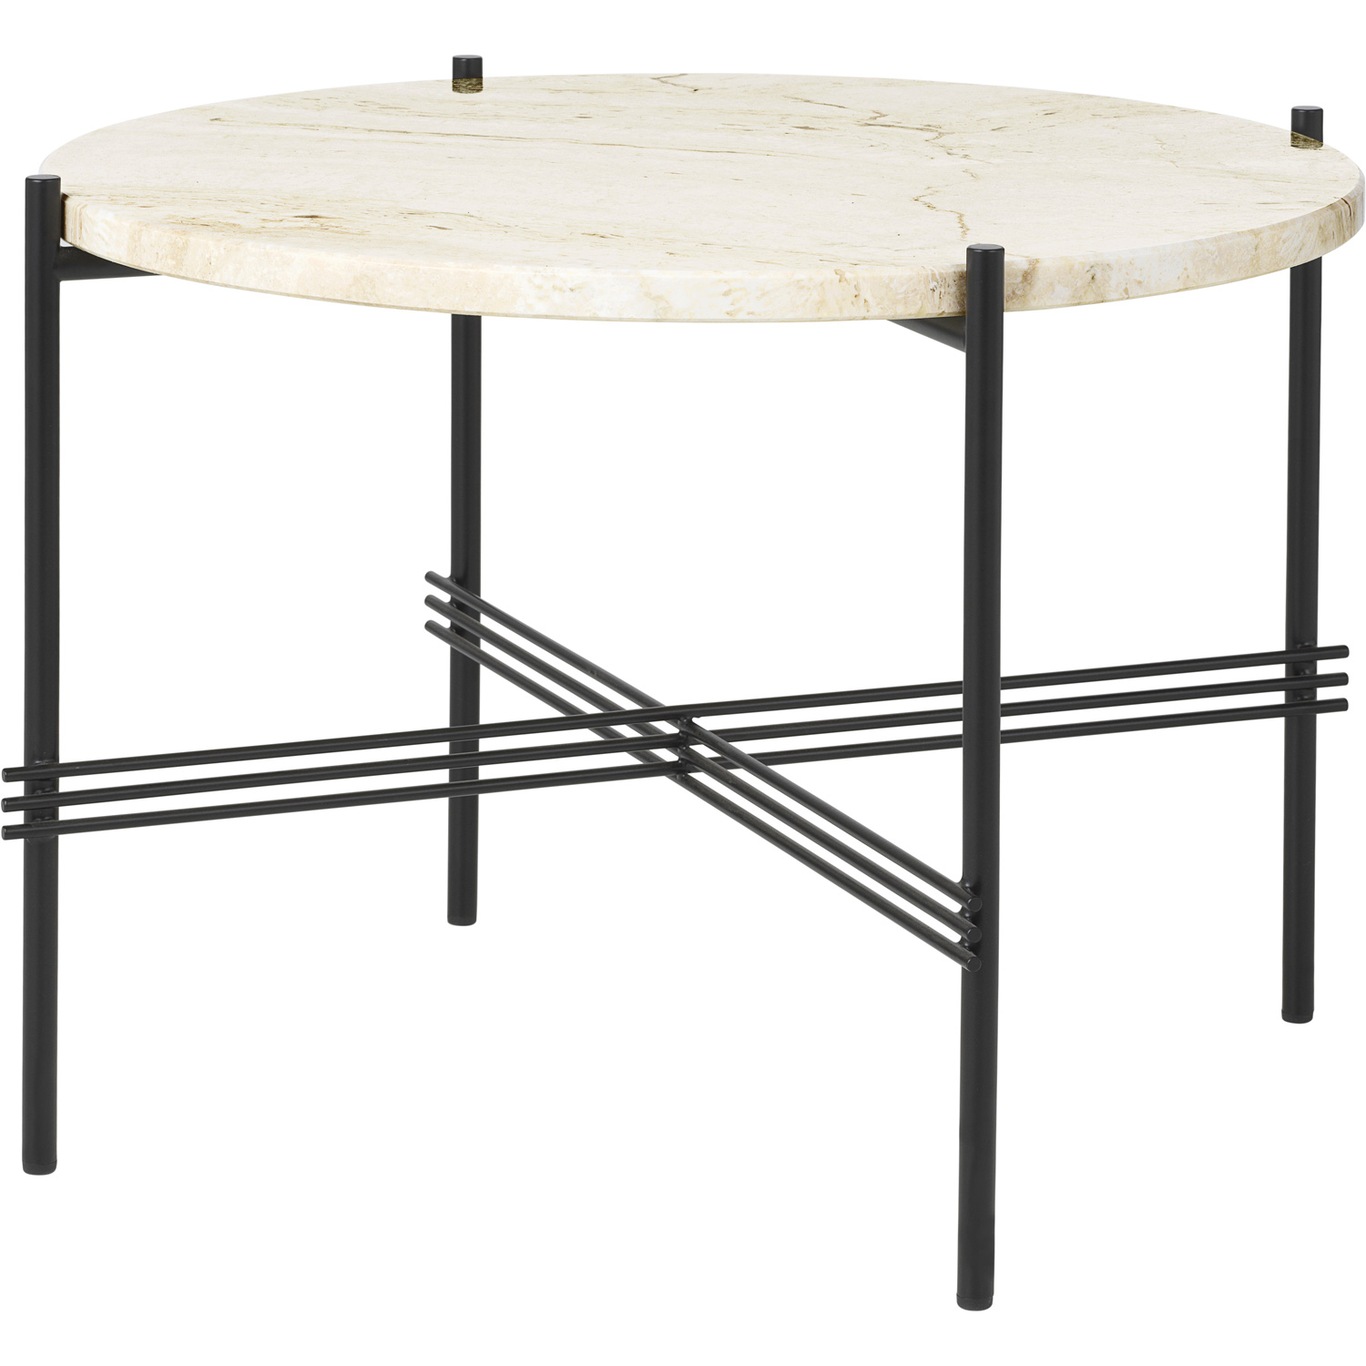 TS Coffee Table 55 cm, Black / Neutral white Travertine